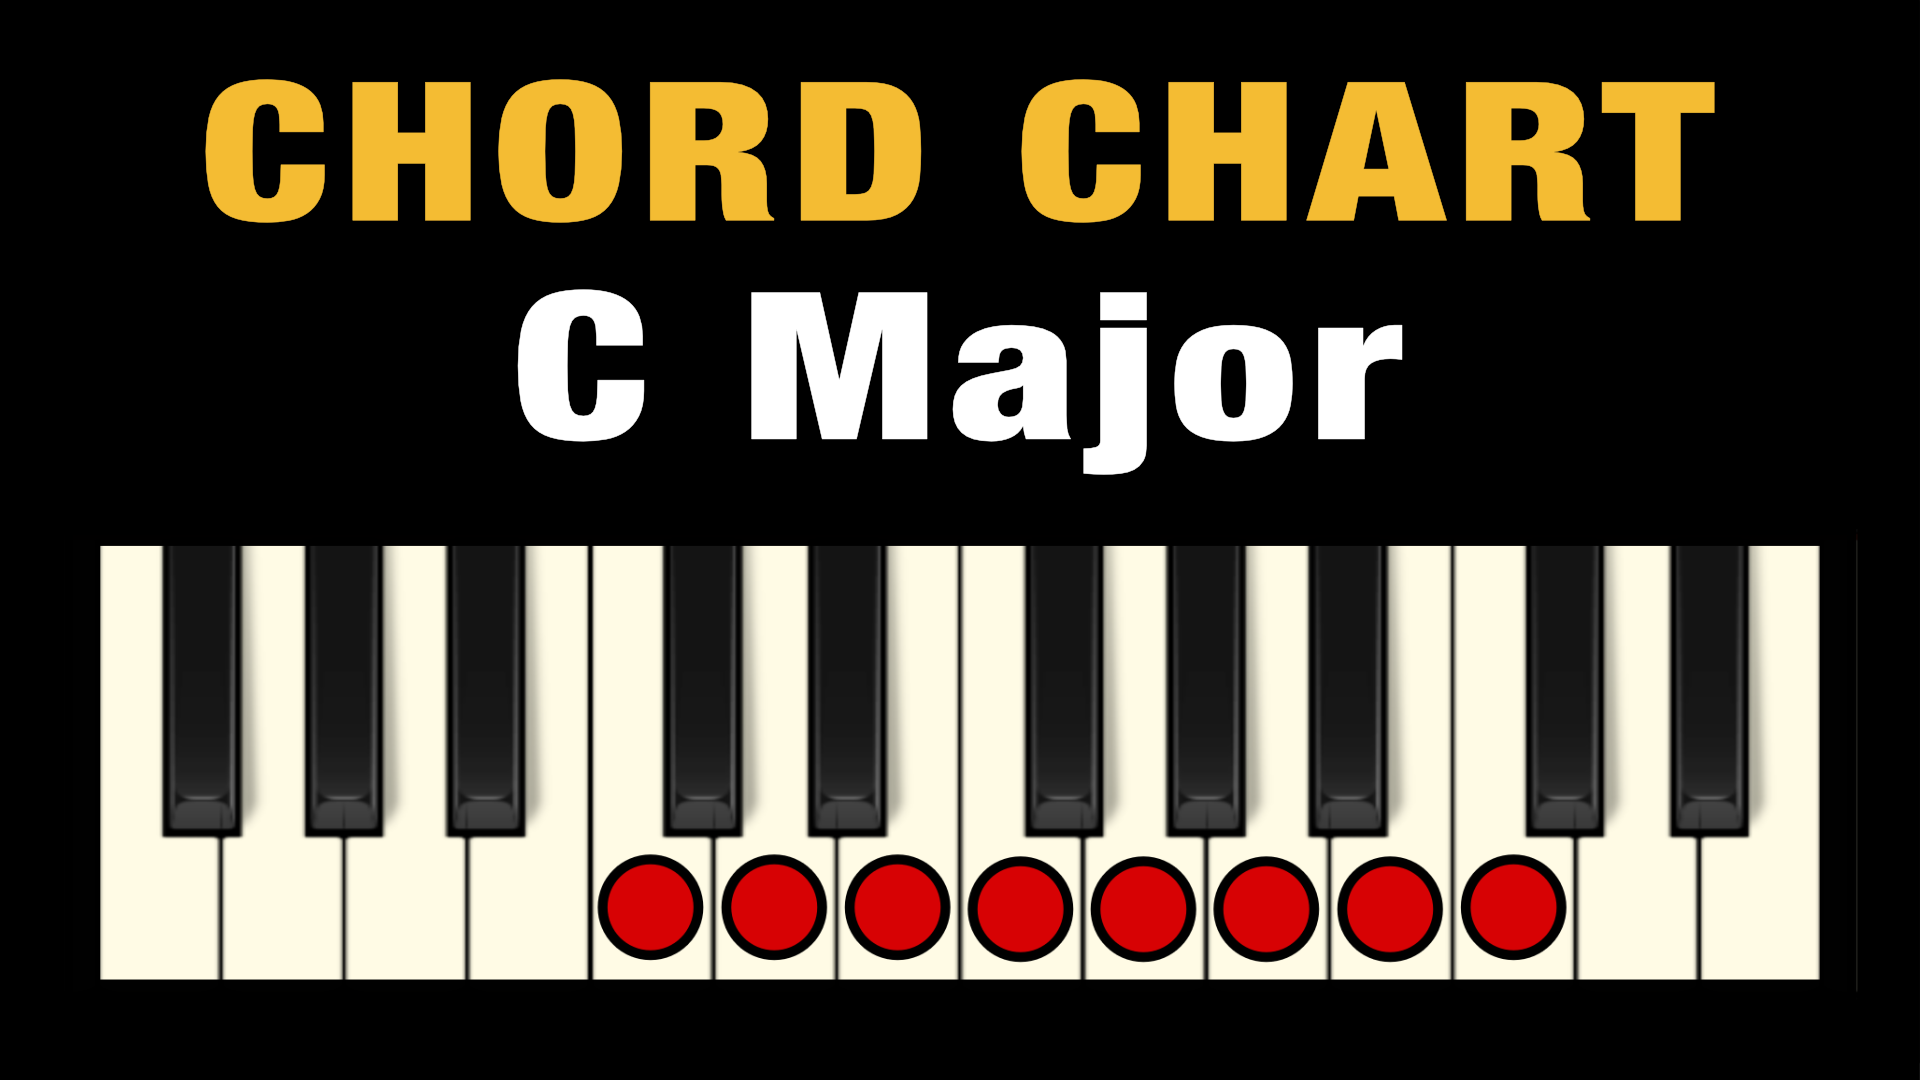 guitar chords in the key of c major